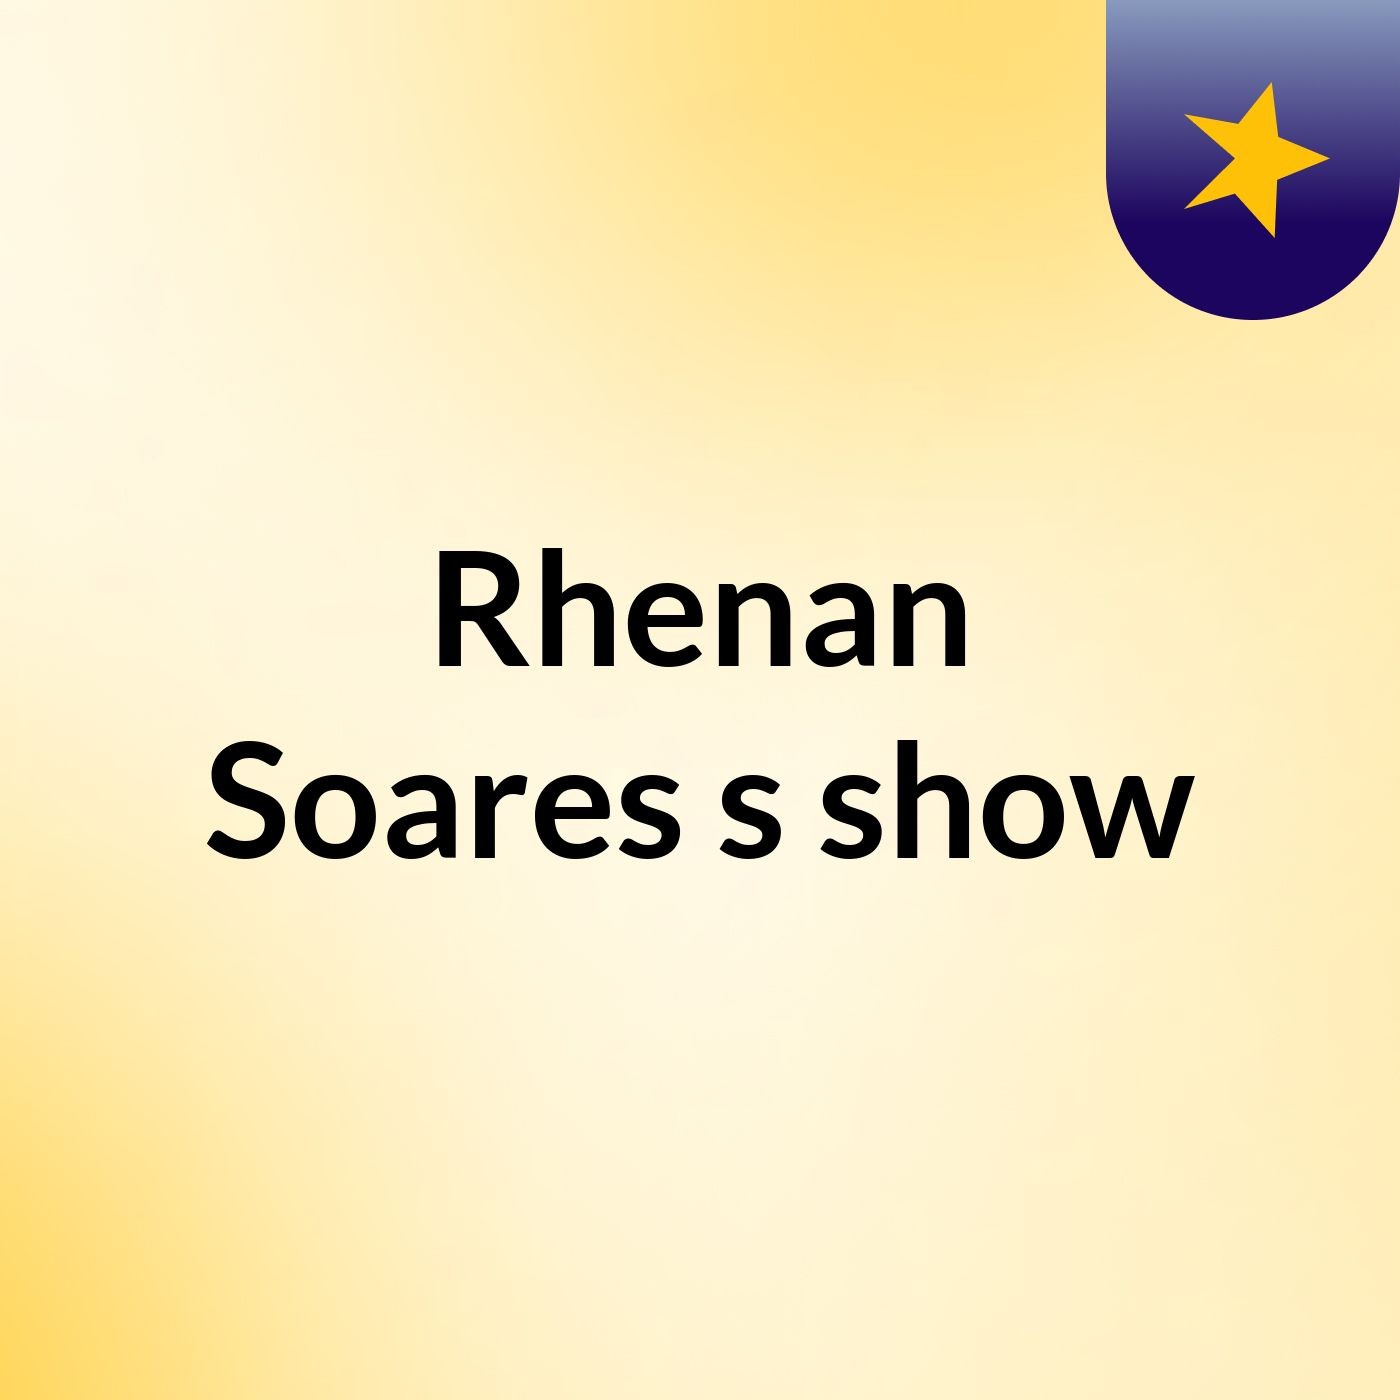 Rhenan Soares's show